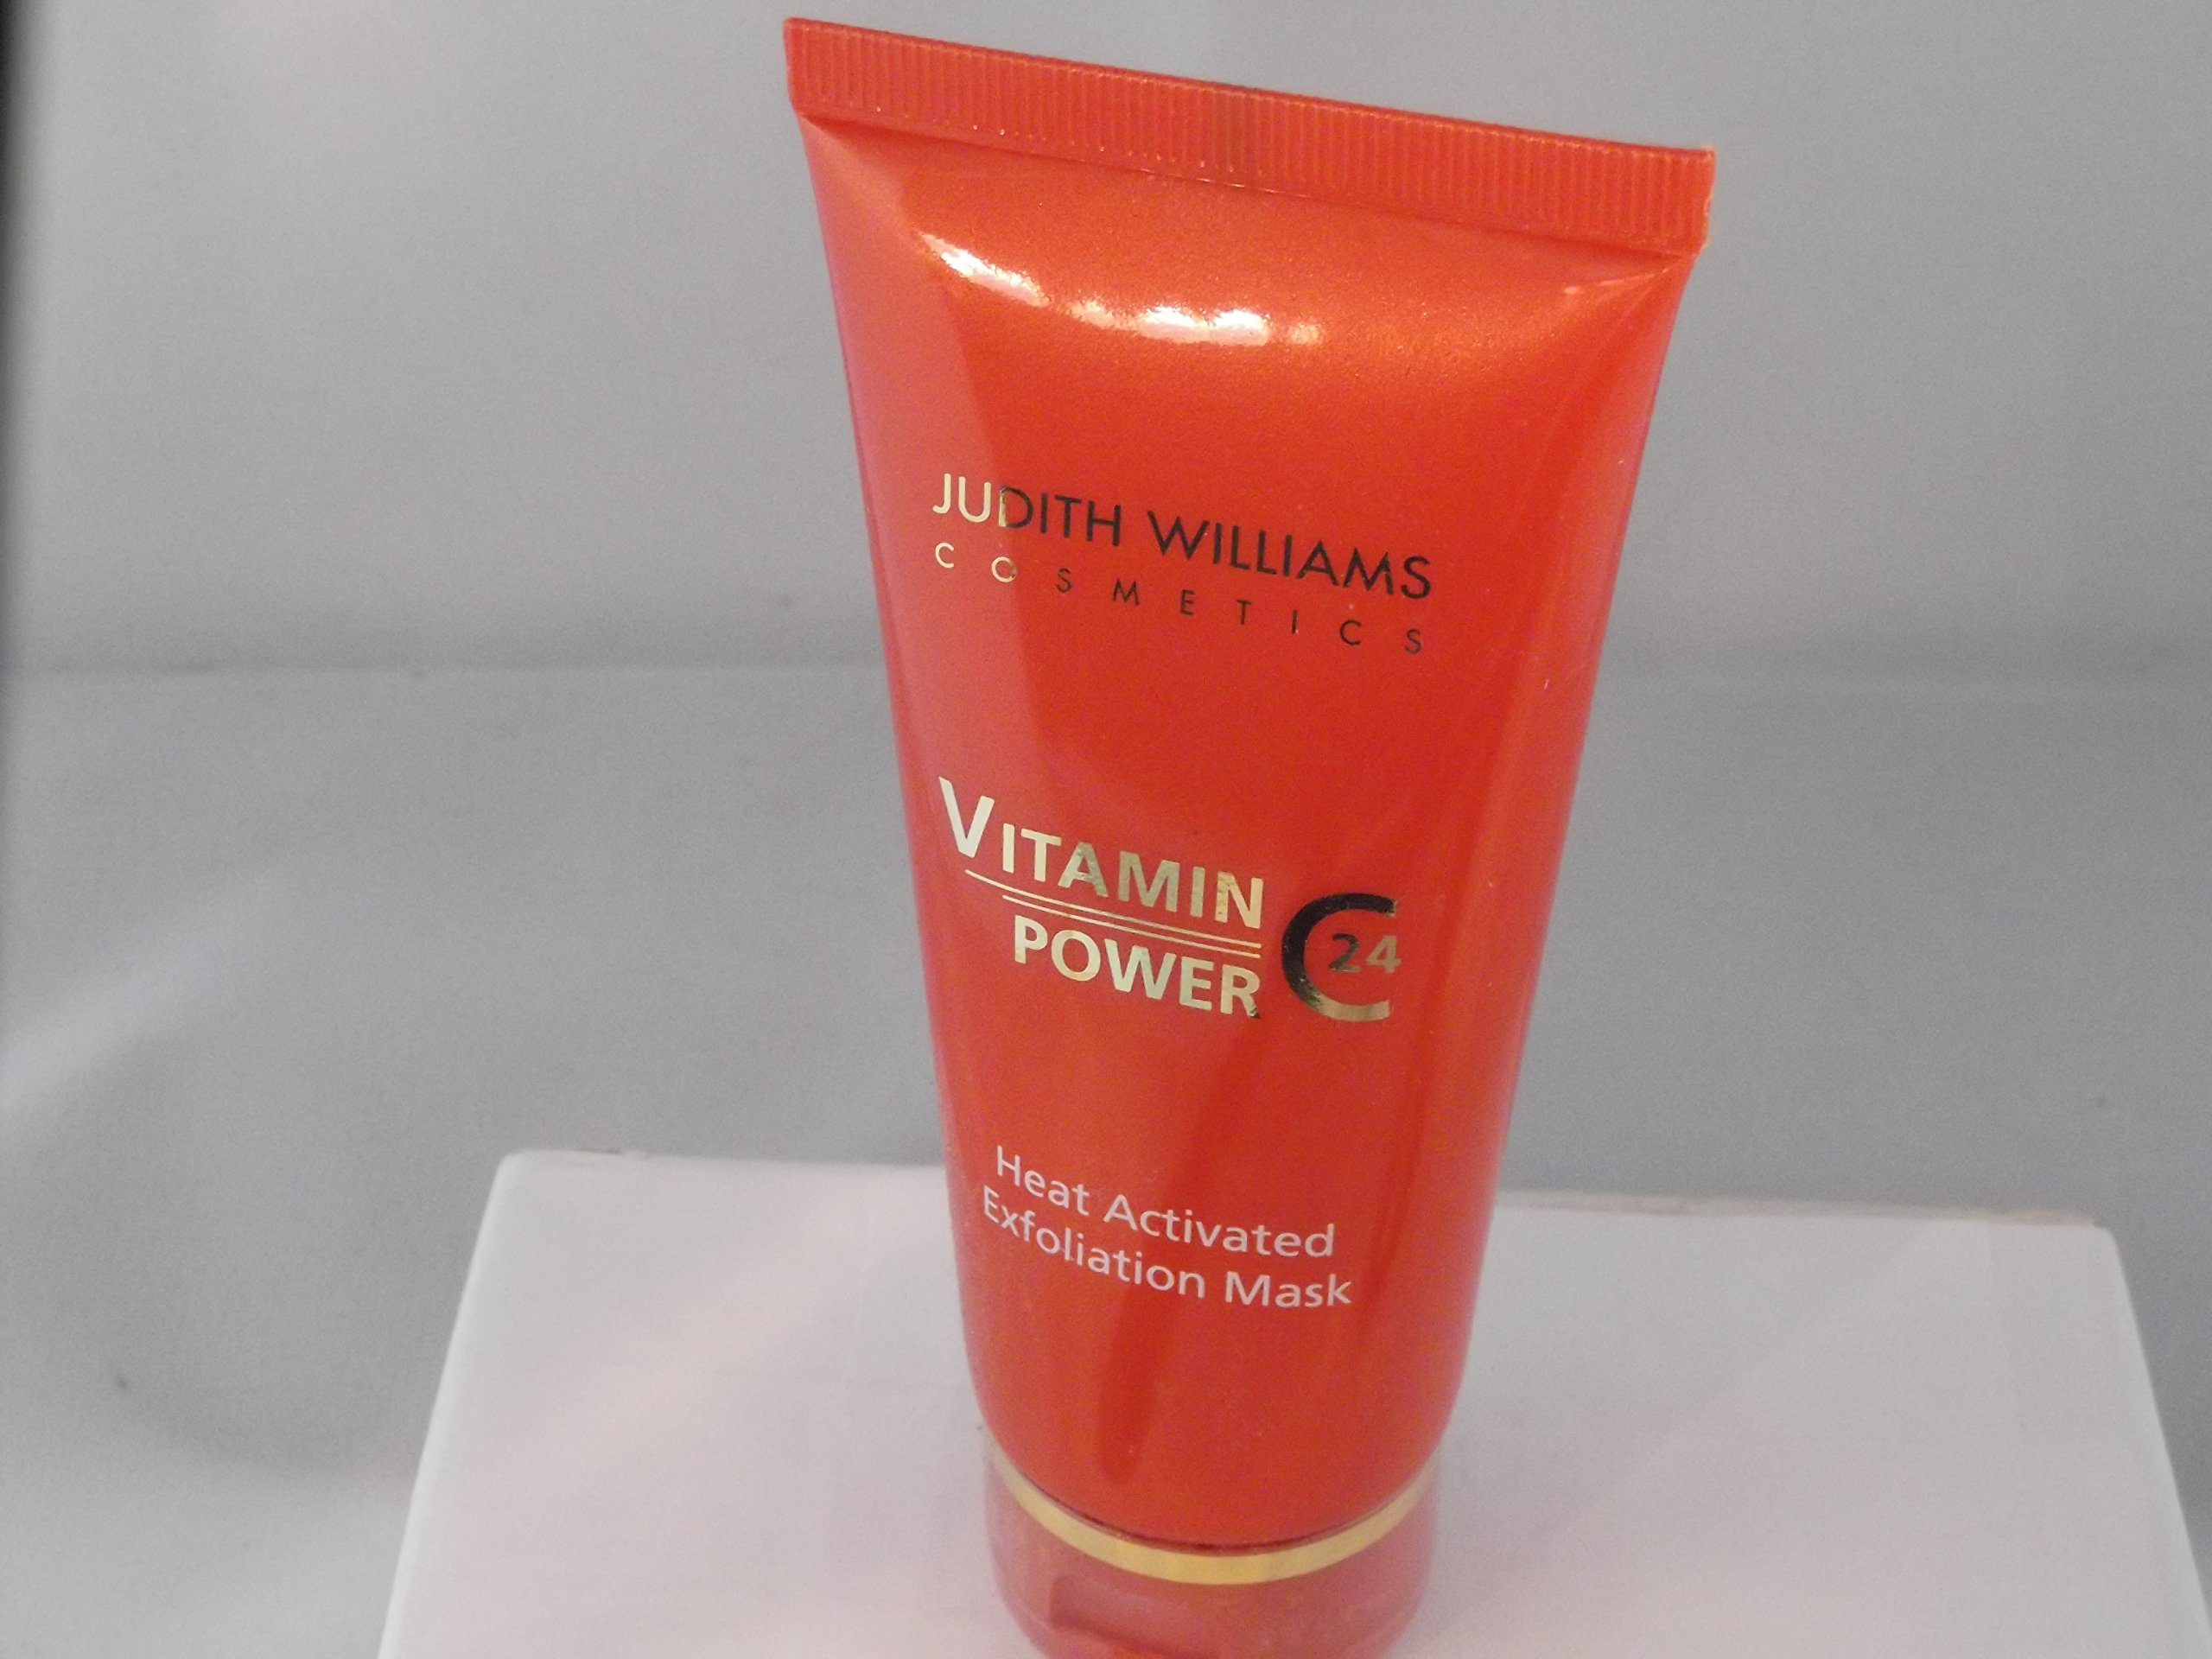 Judith Williams Vitamin C 24Power Exfoliation Mask